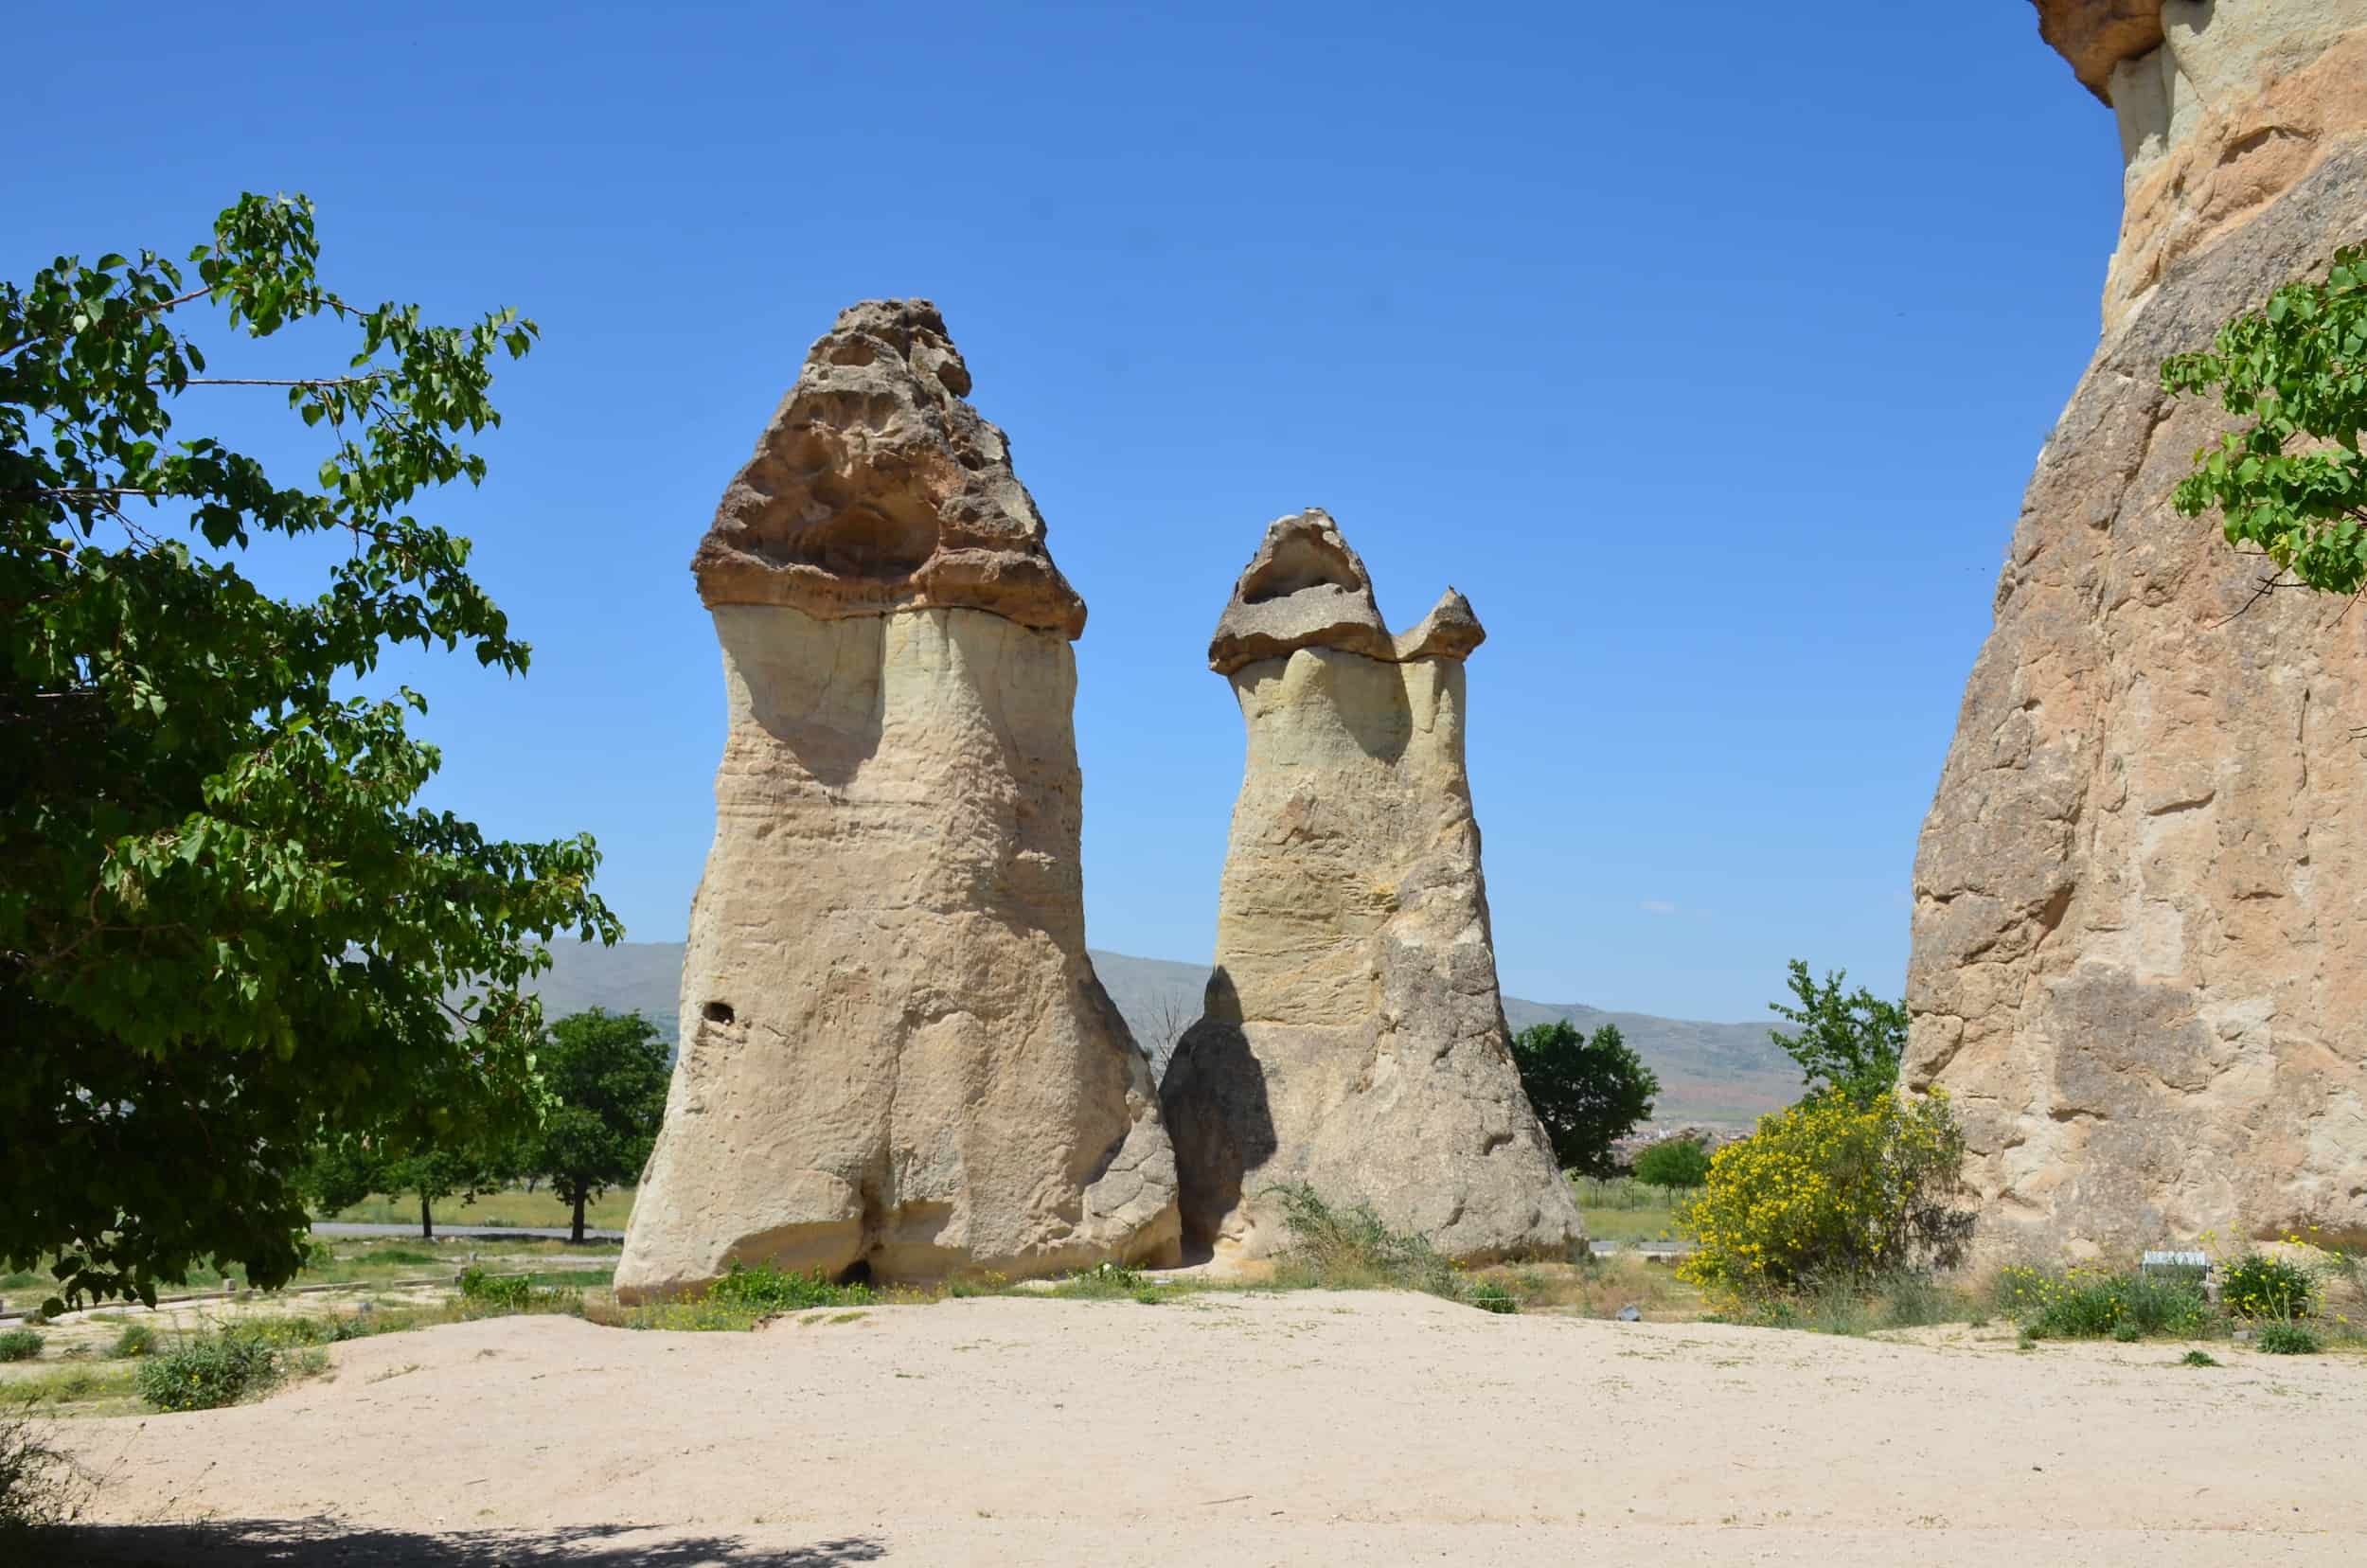 Fairy chimneys at Paşabağ (Monk's Valley) in Cappadocia, Turkey